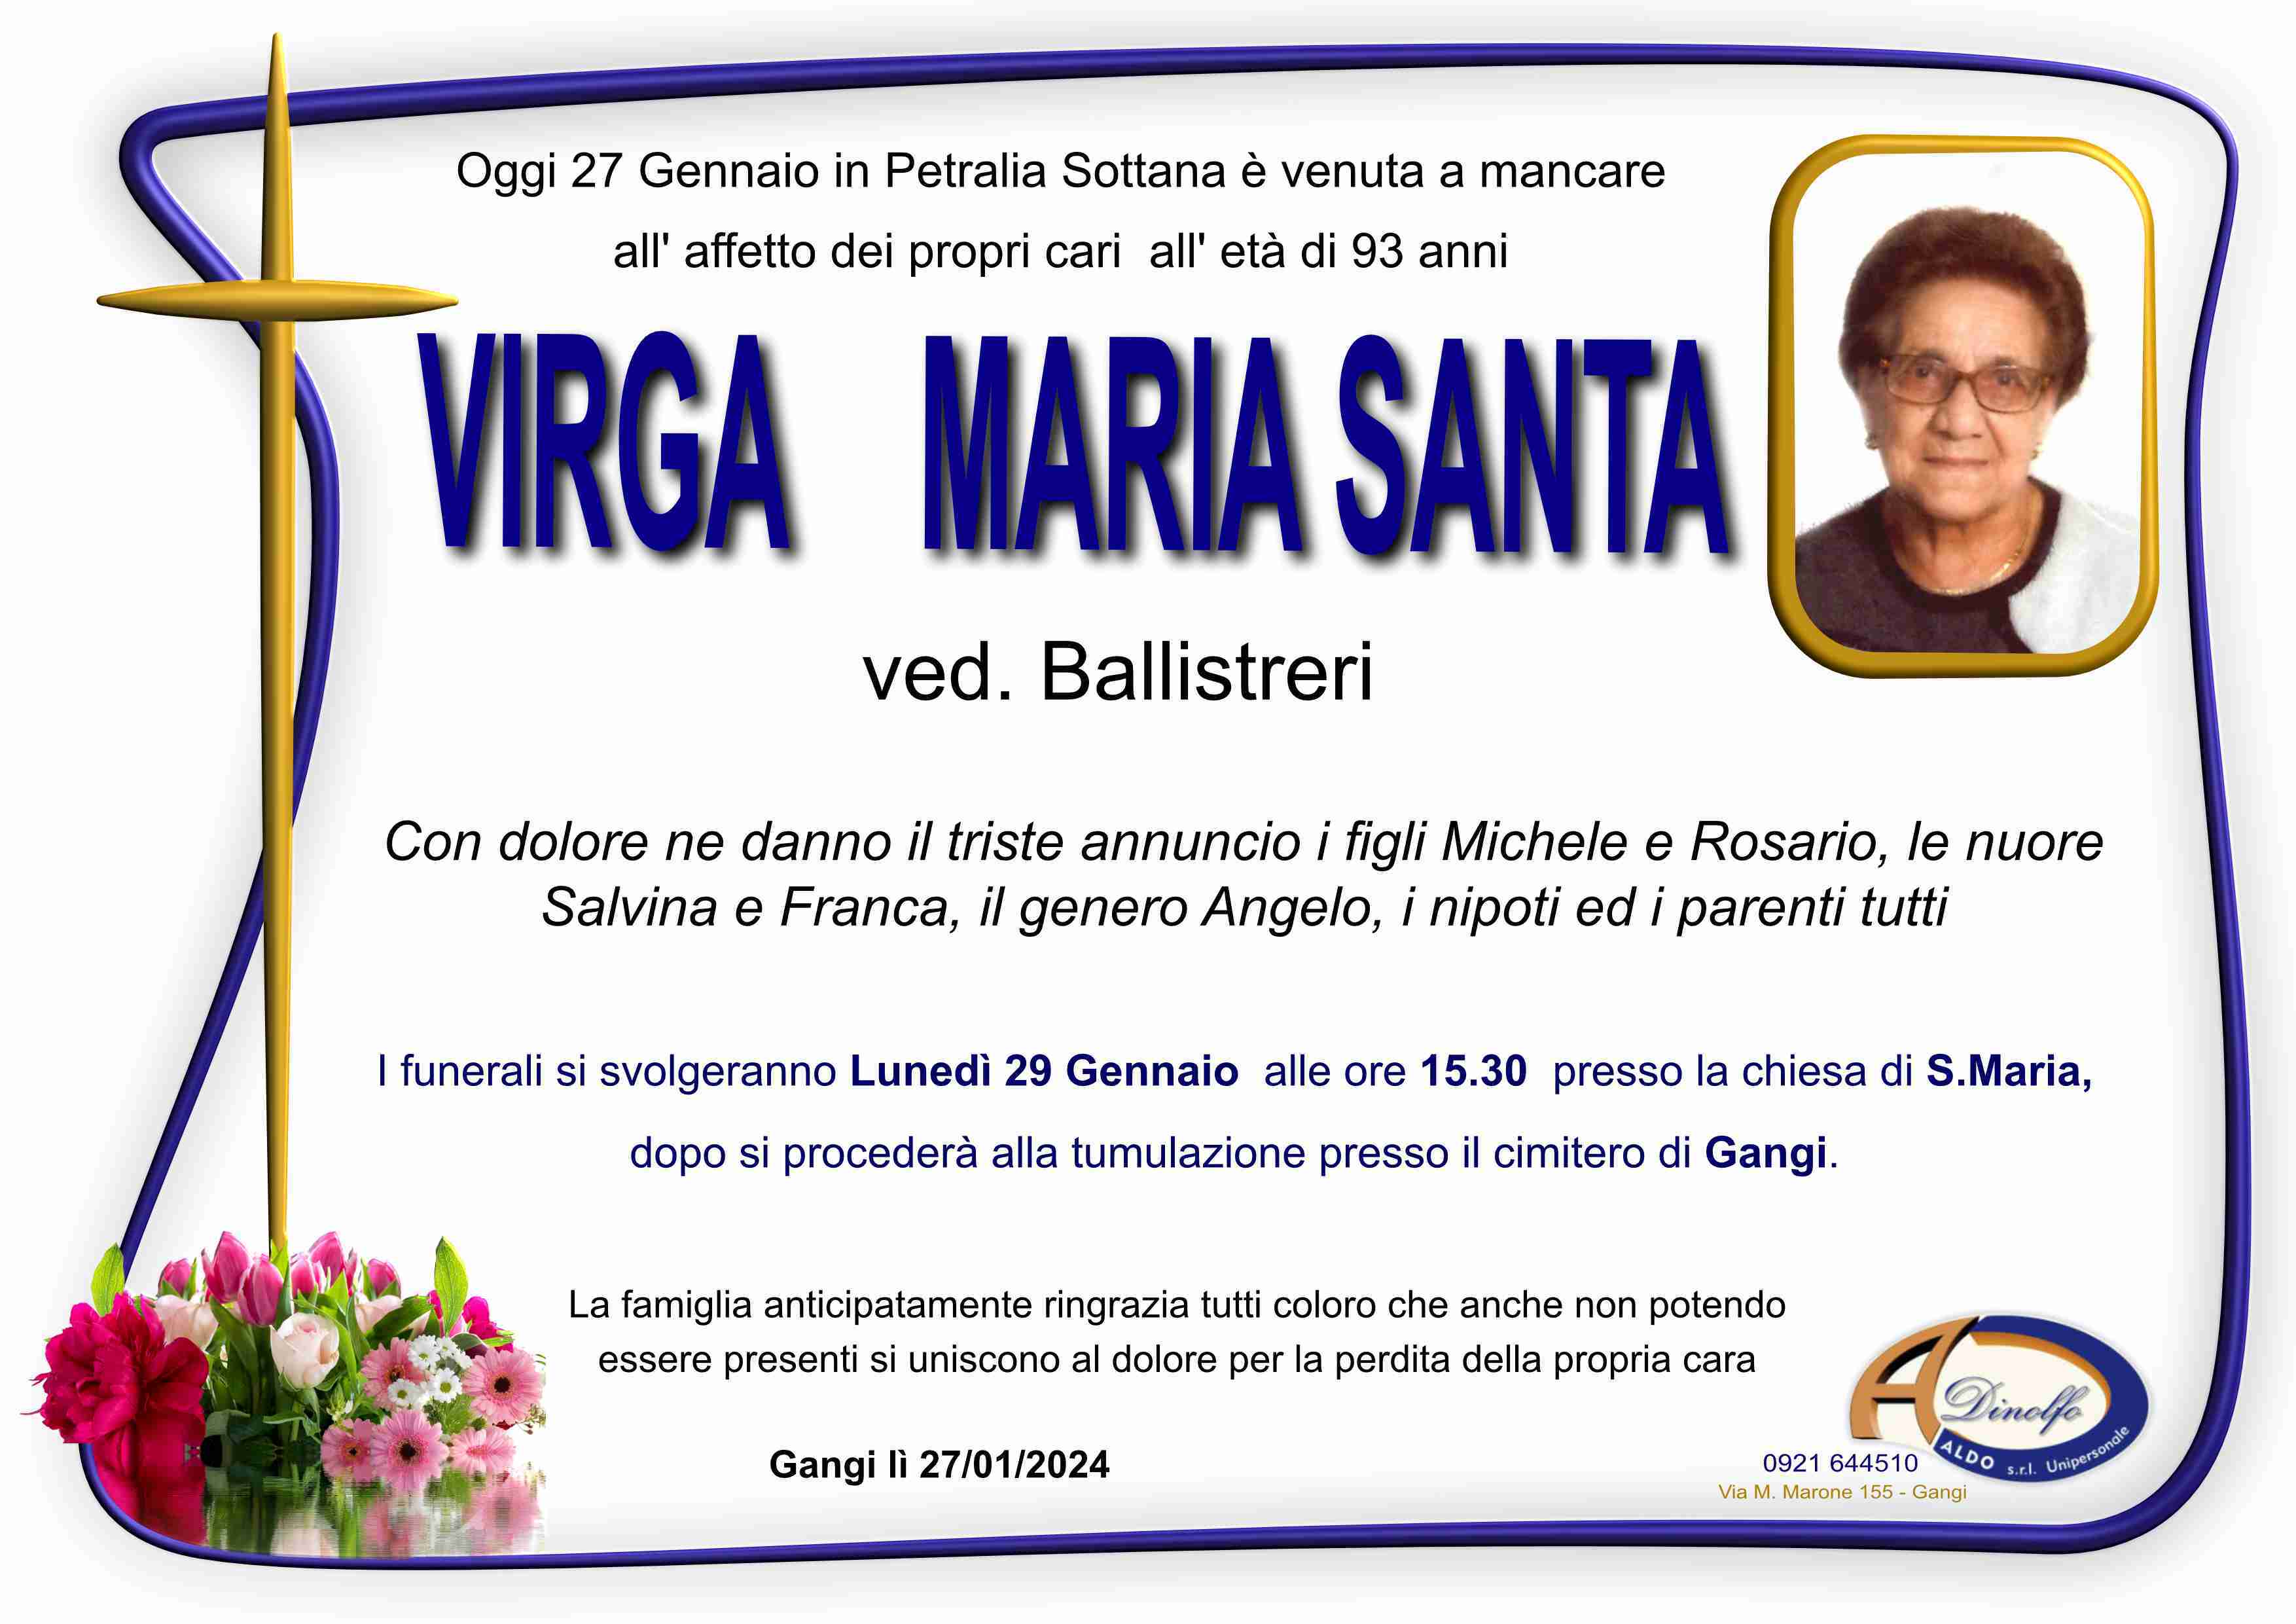 Maria Santa Virga